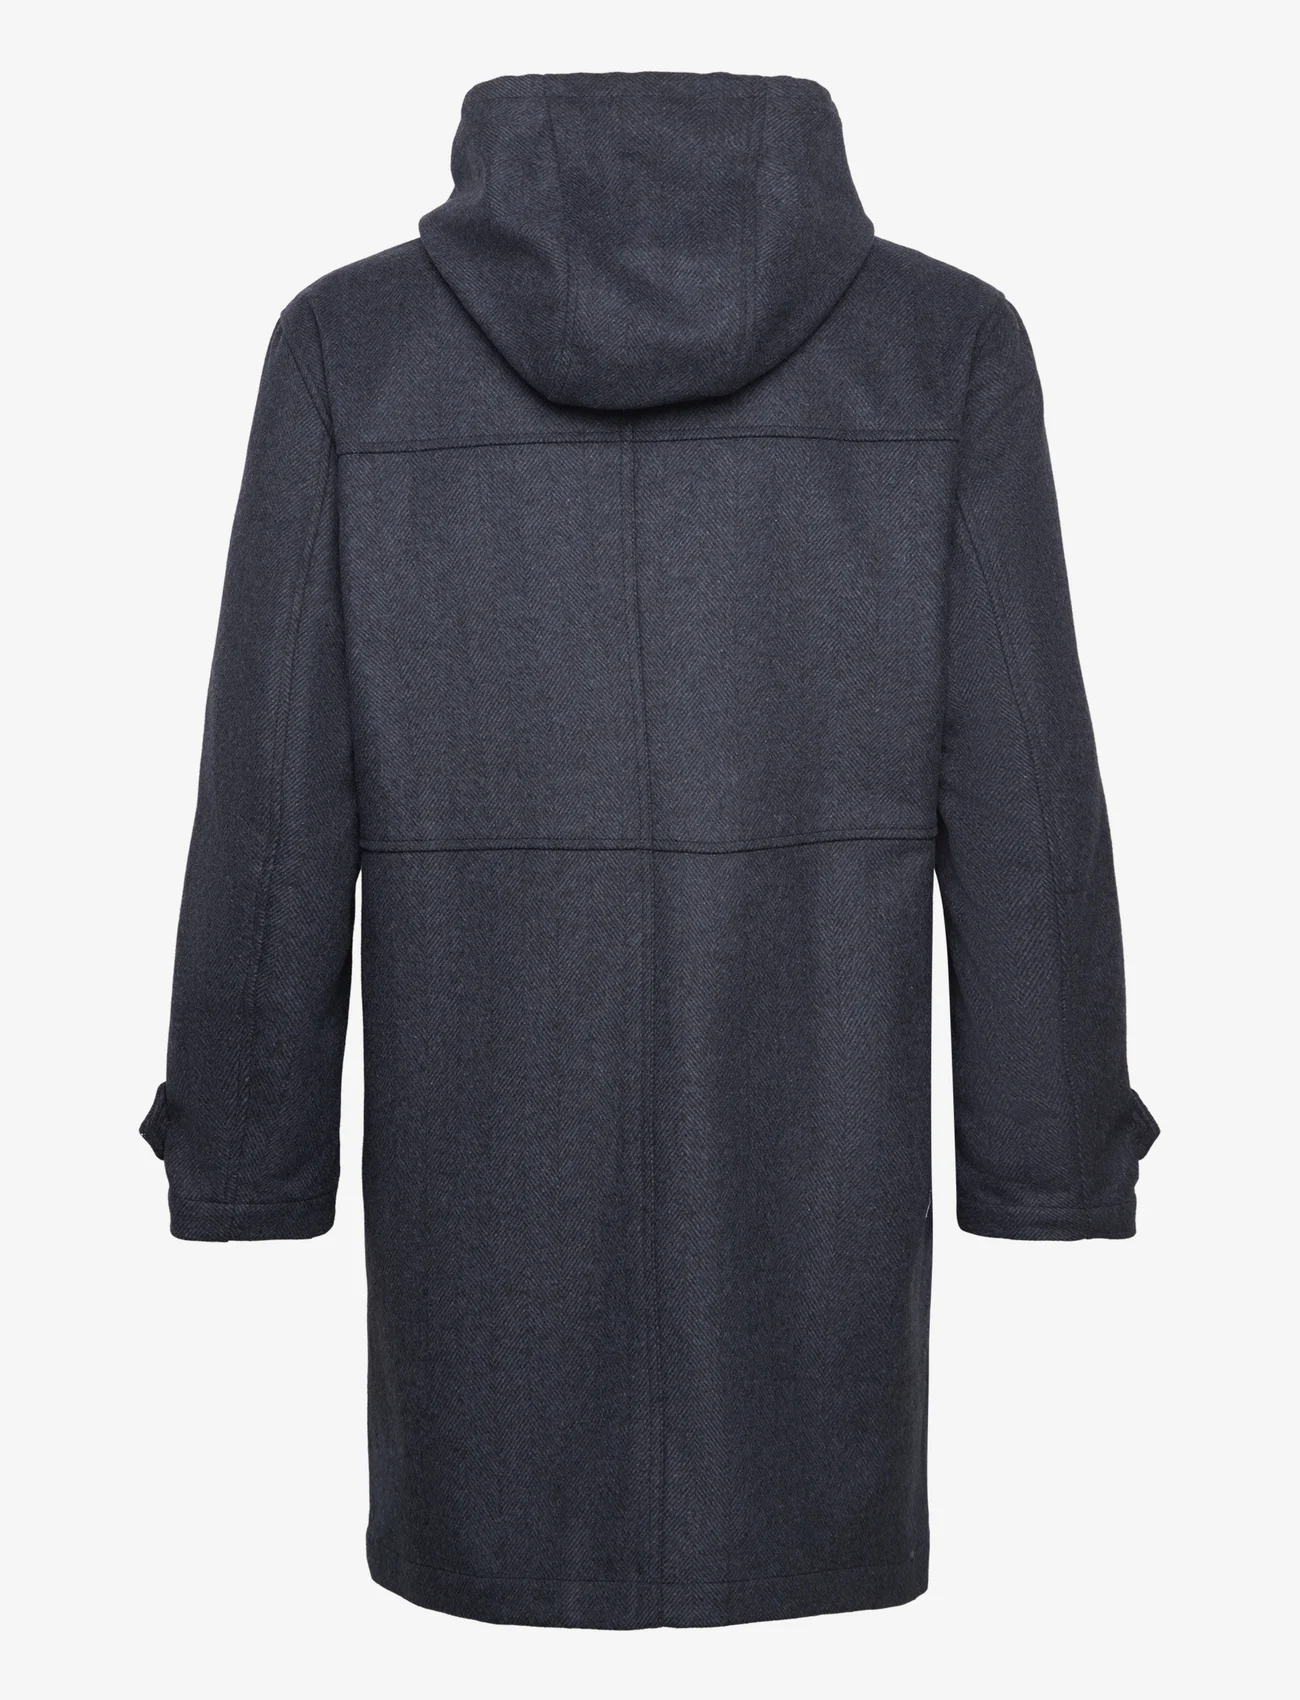 FRENN - Paavo Wool Parka Coat - winter jackets - blue - 1